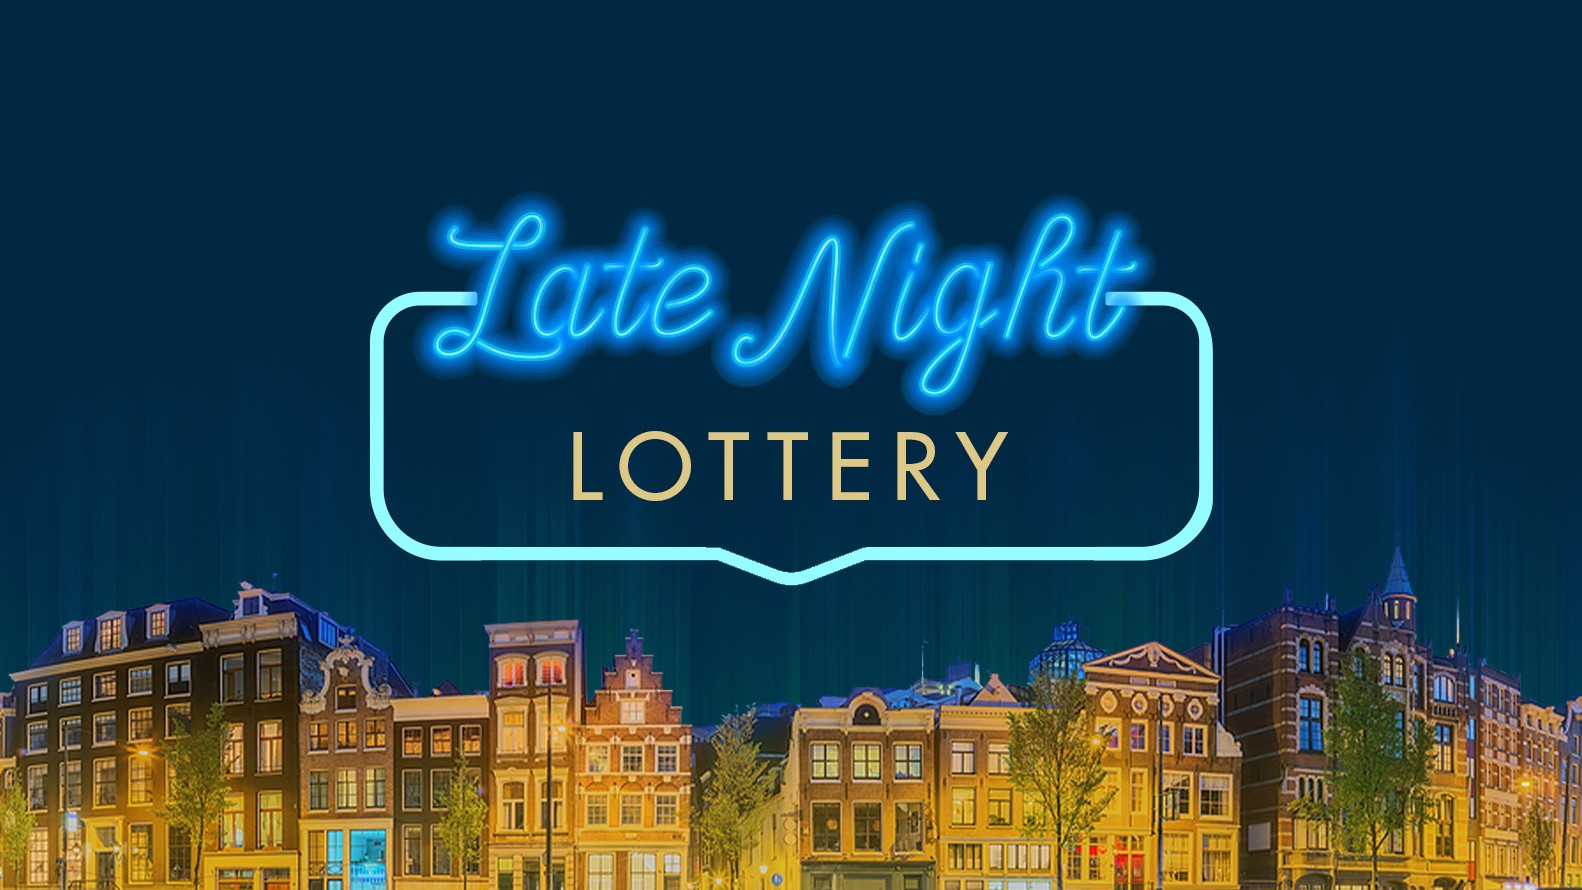 Late Night Lottery Circus Gran Casino Tiel